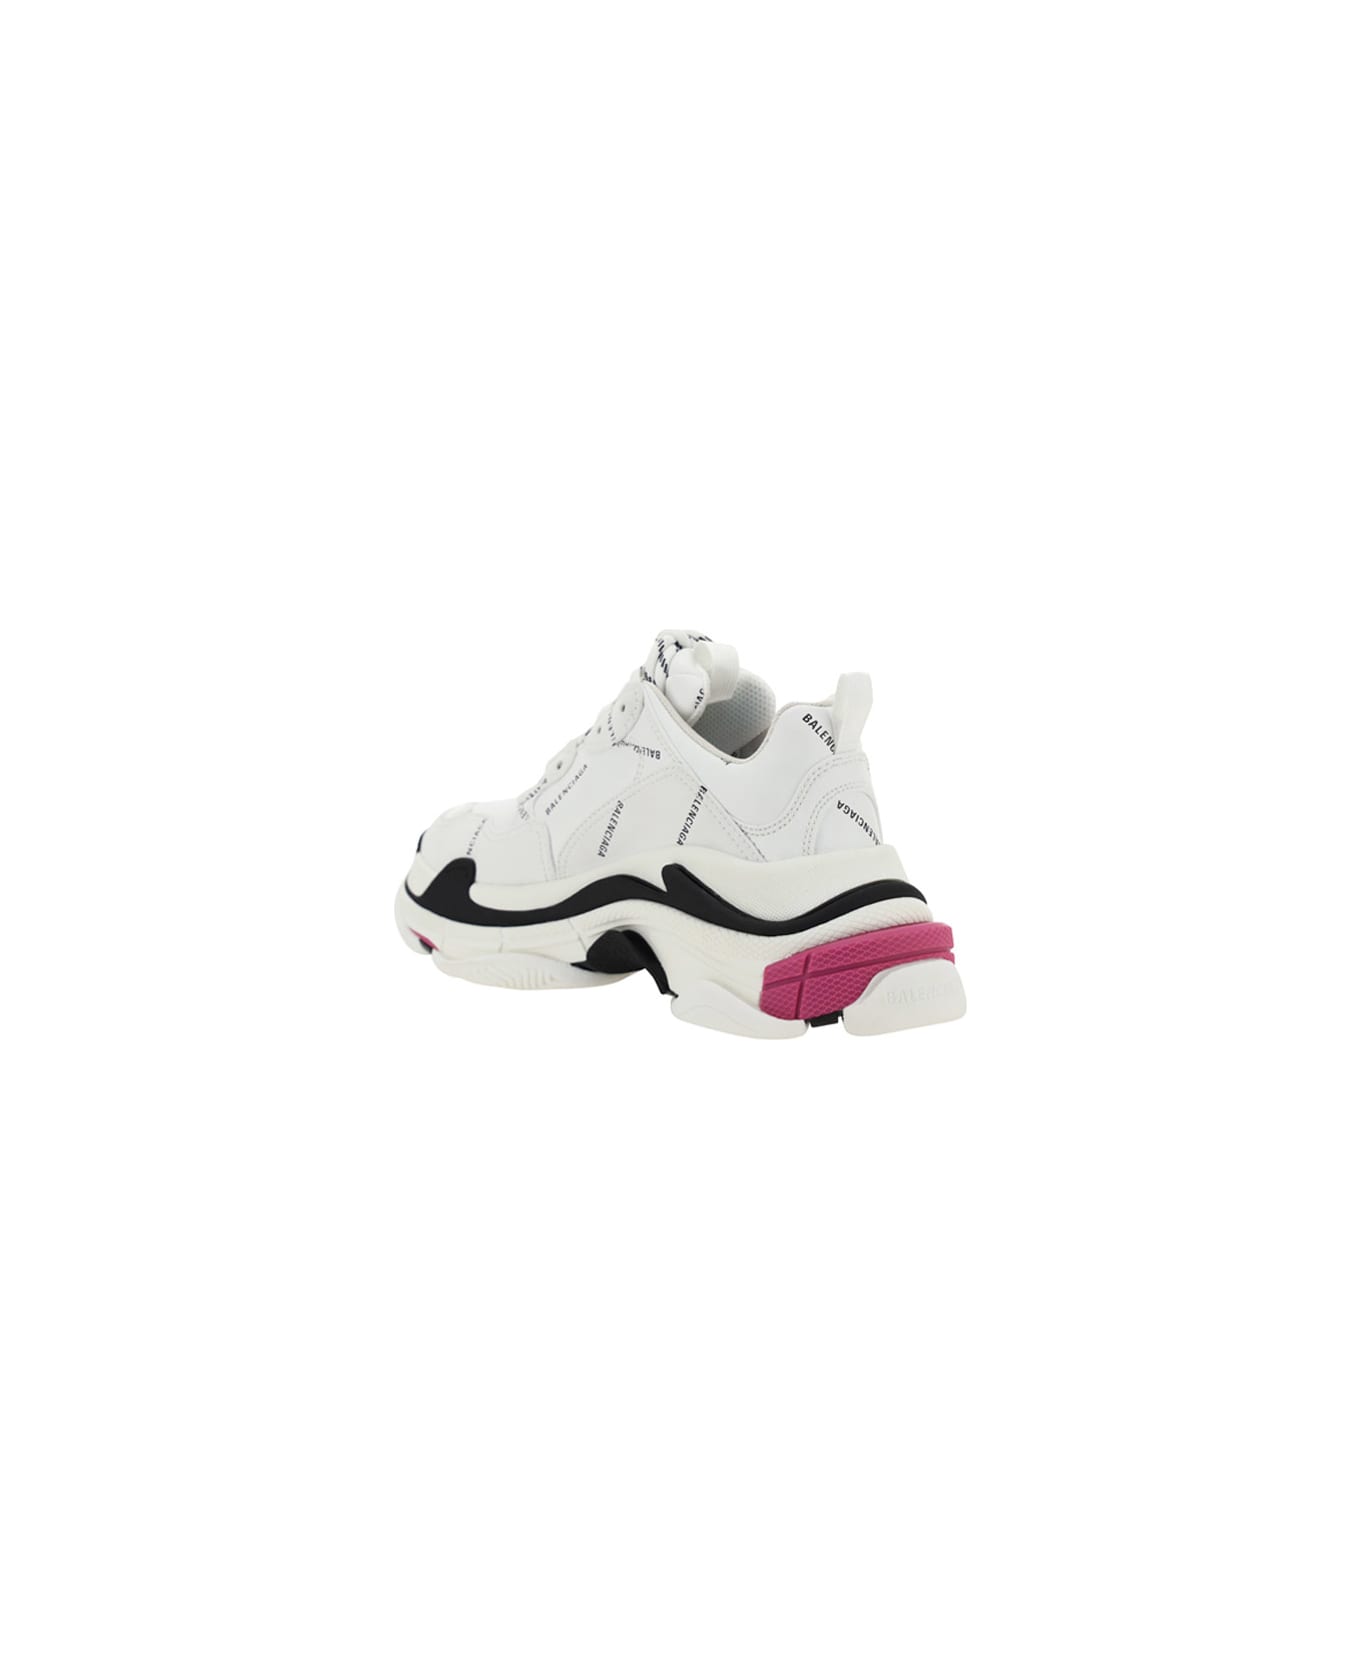 Balenciaga Triple S Sneakers - White/blk/fluo pink